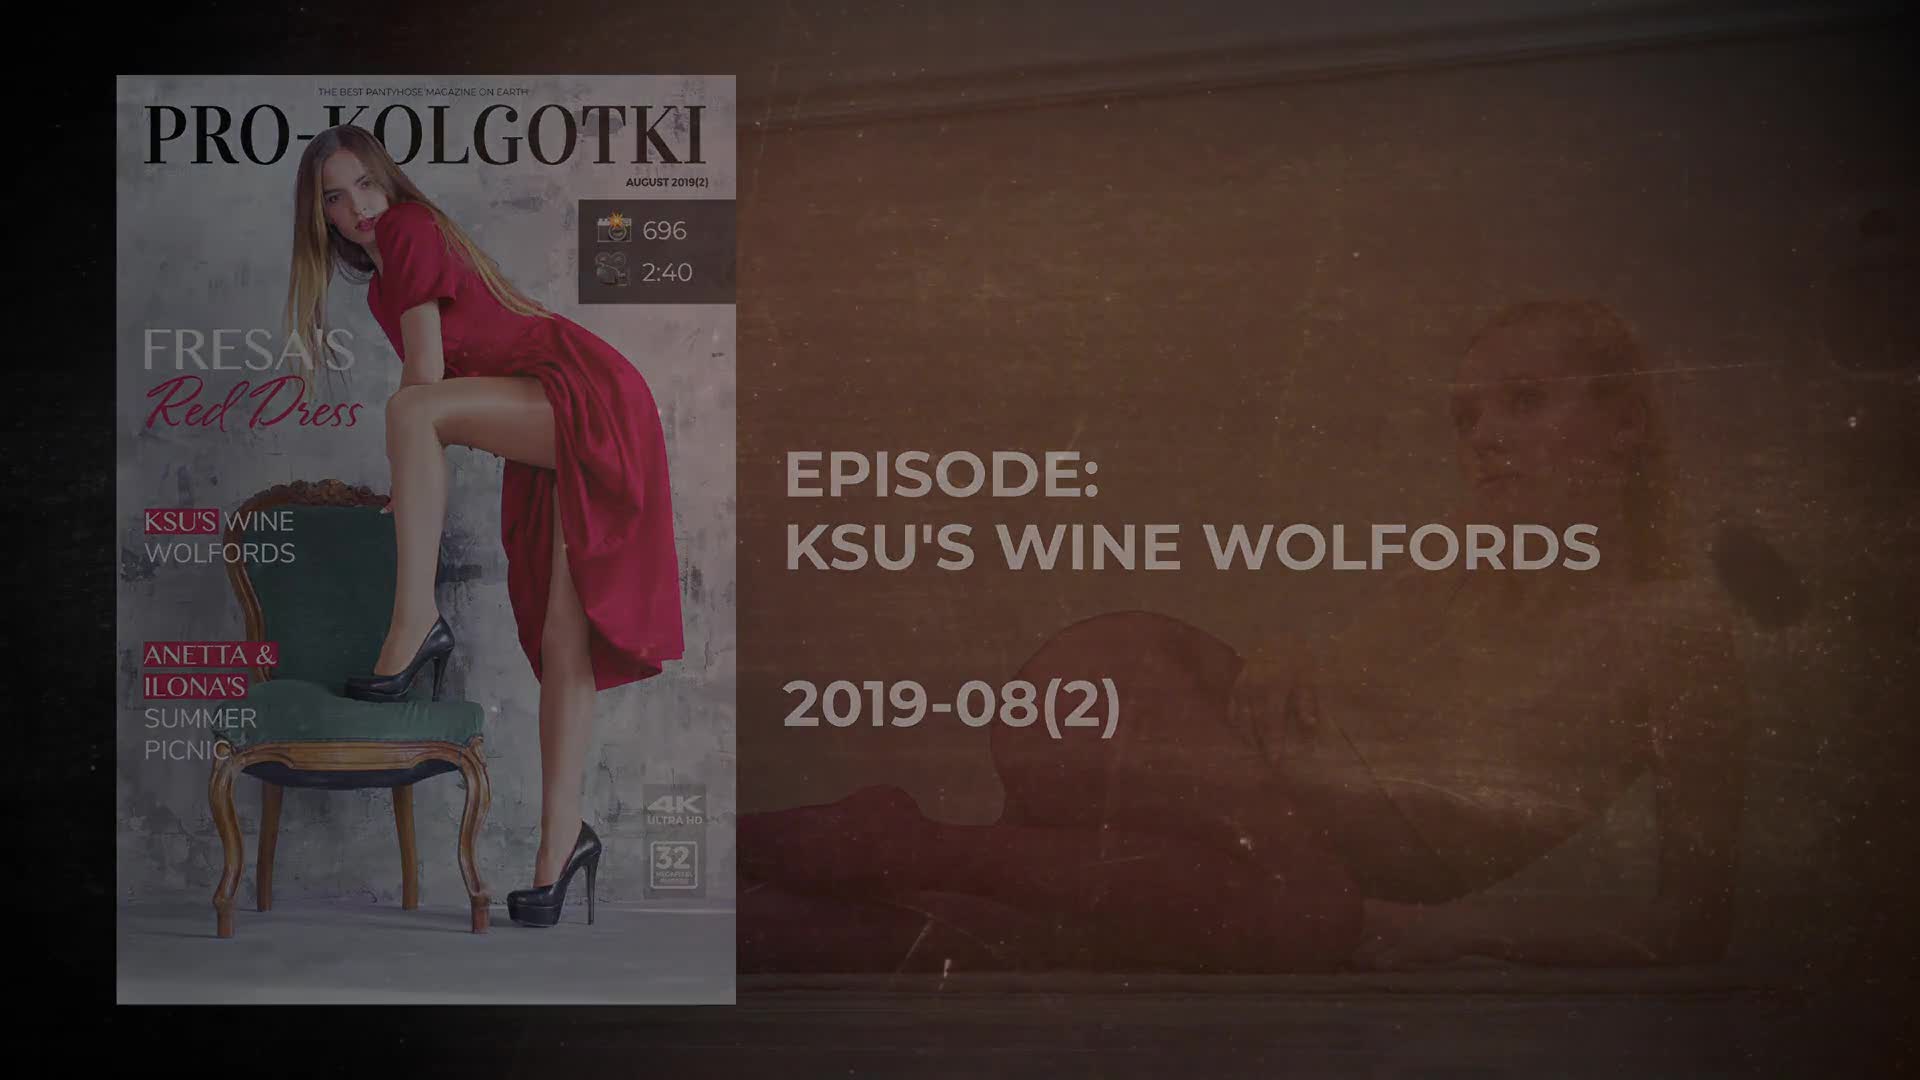 Ksu Posing in Wolford Pantyhose Wine Shade 2019-08(2)